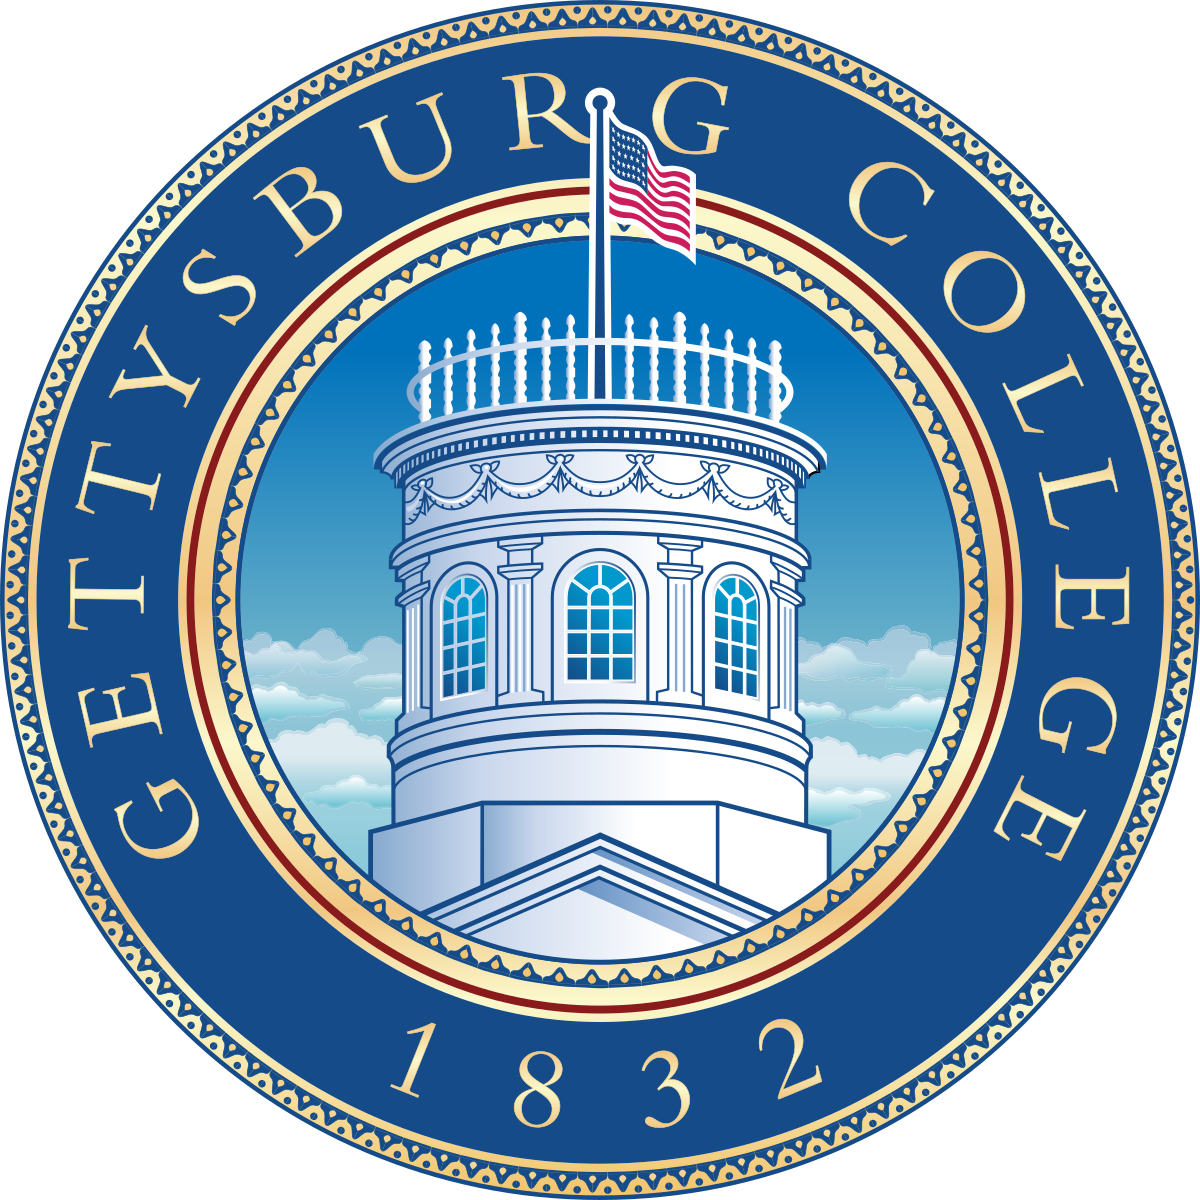 Gettysburg College - Wikipedia